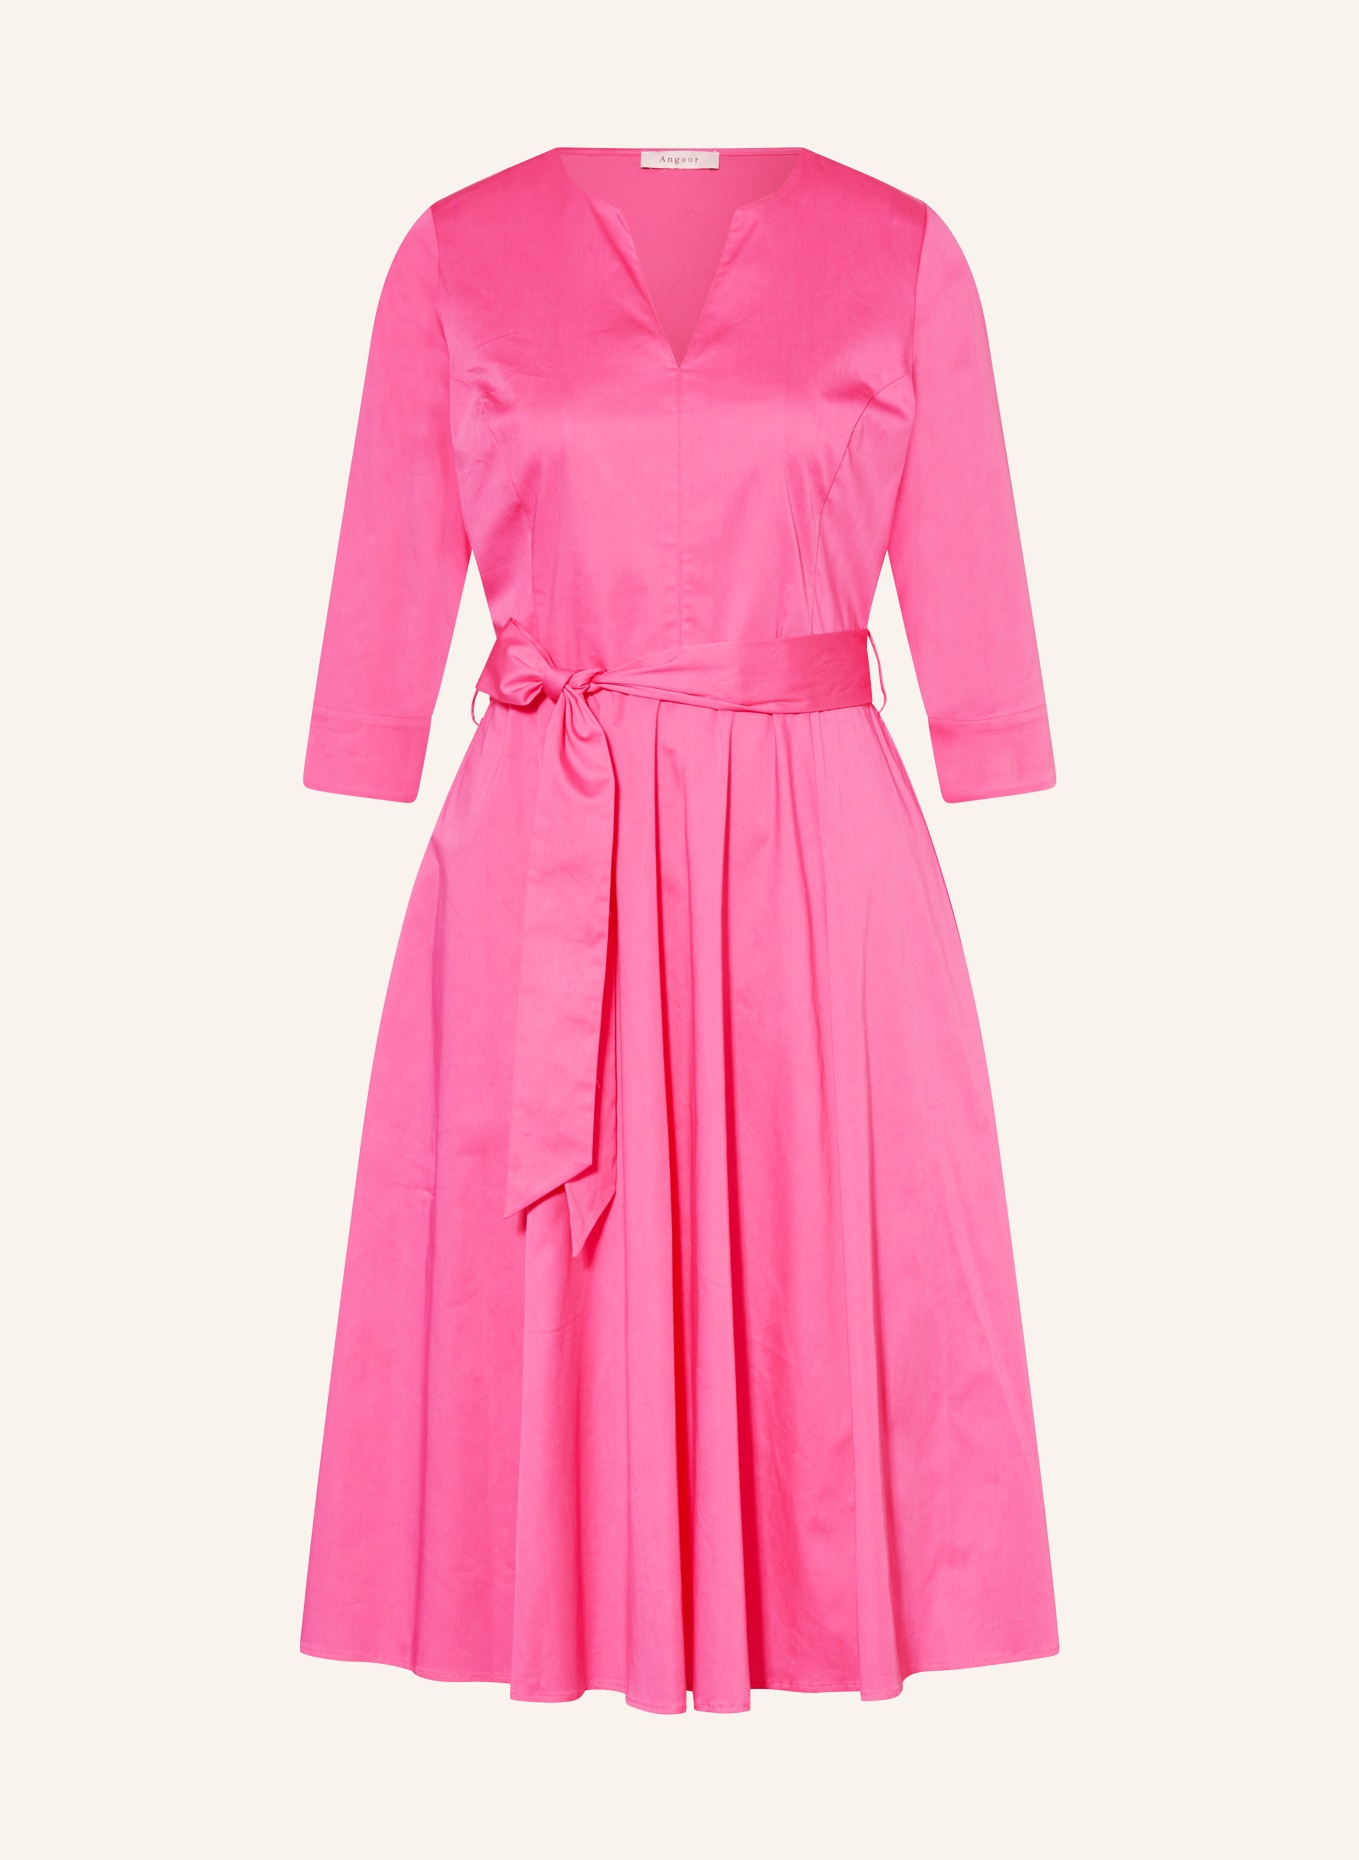 ANGOOR Kleid MARILYN mit 3/4-Arm, Farbe: 60 sorbet pink (Bild 1)